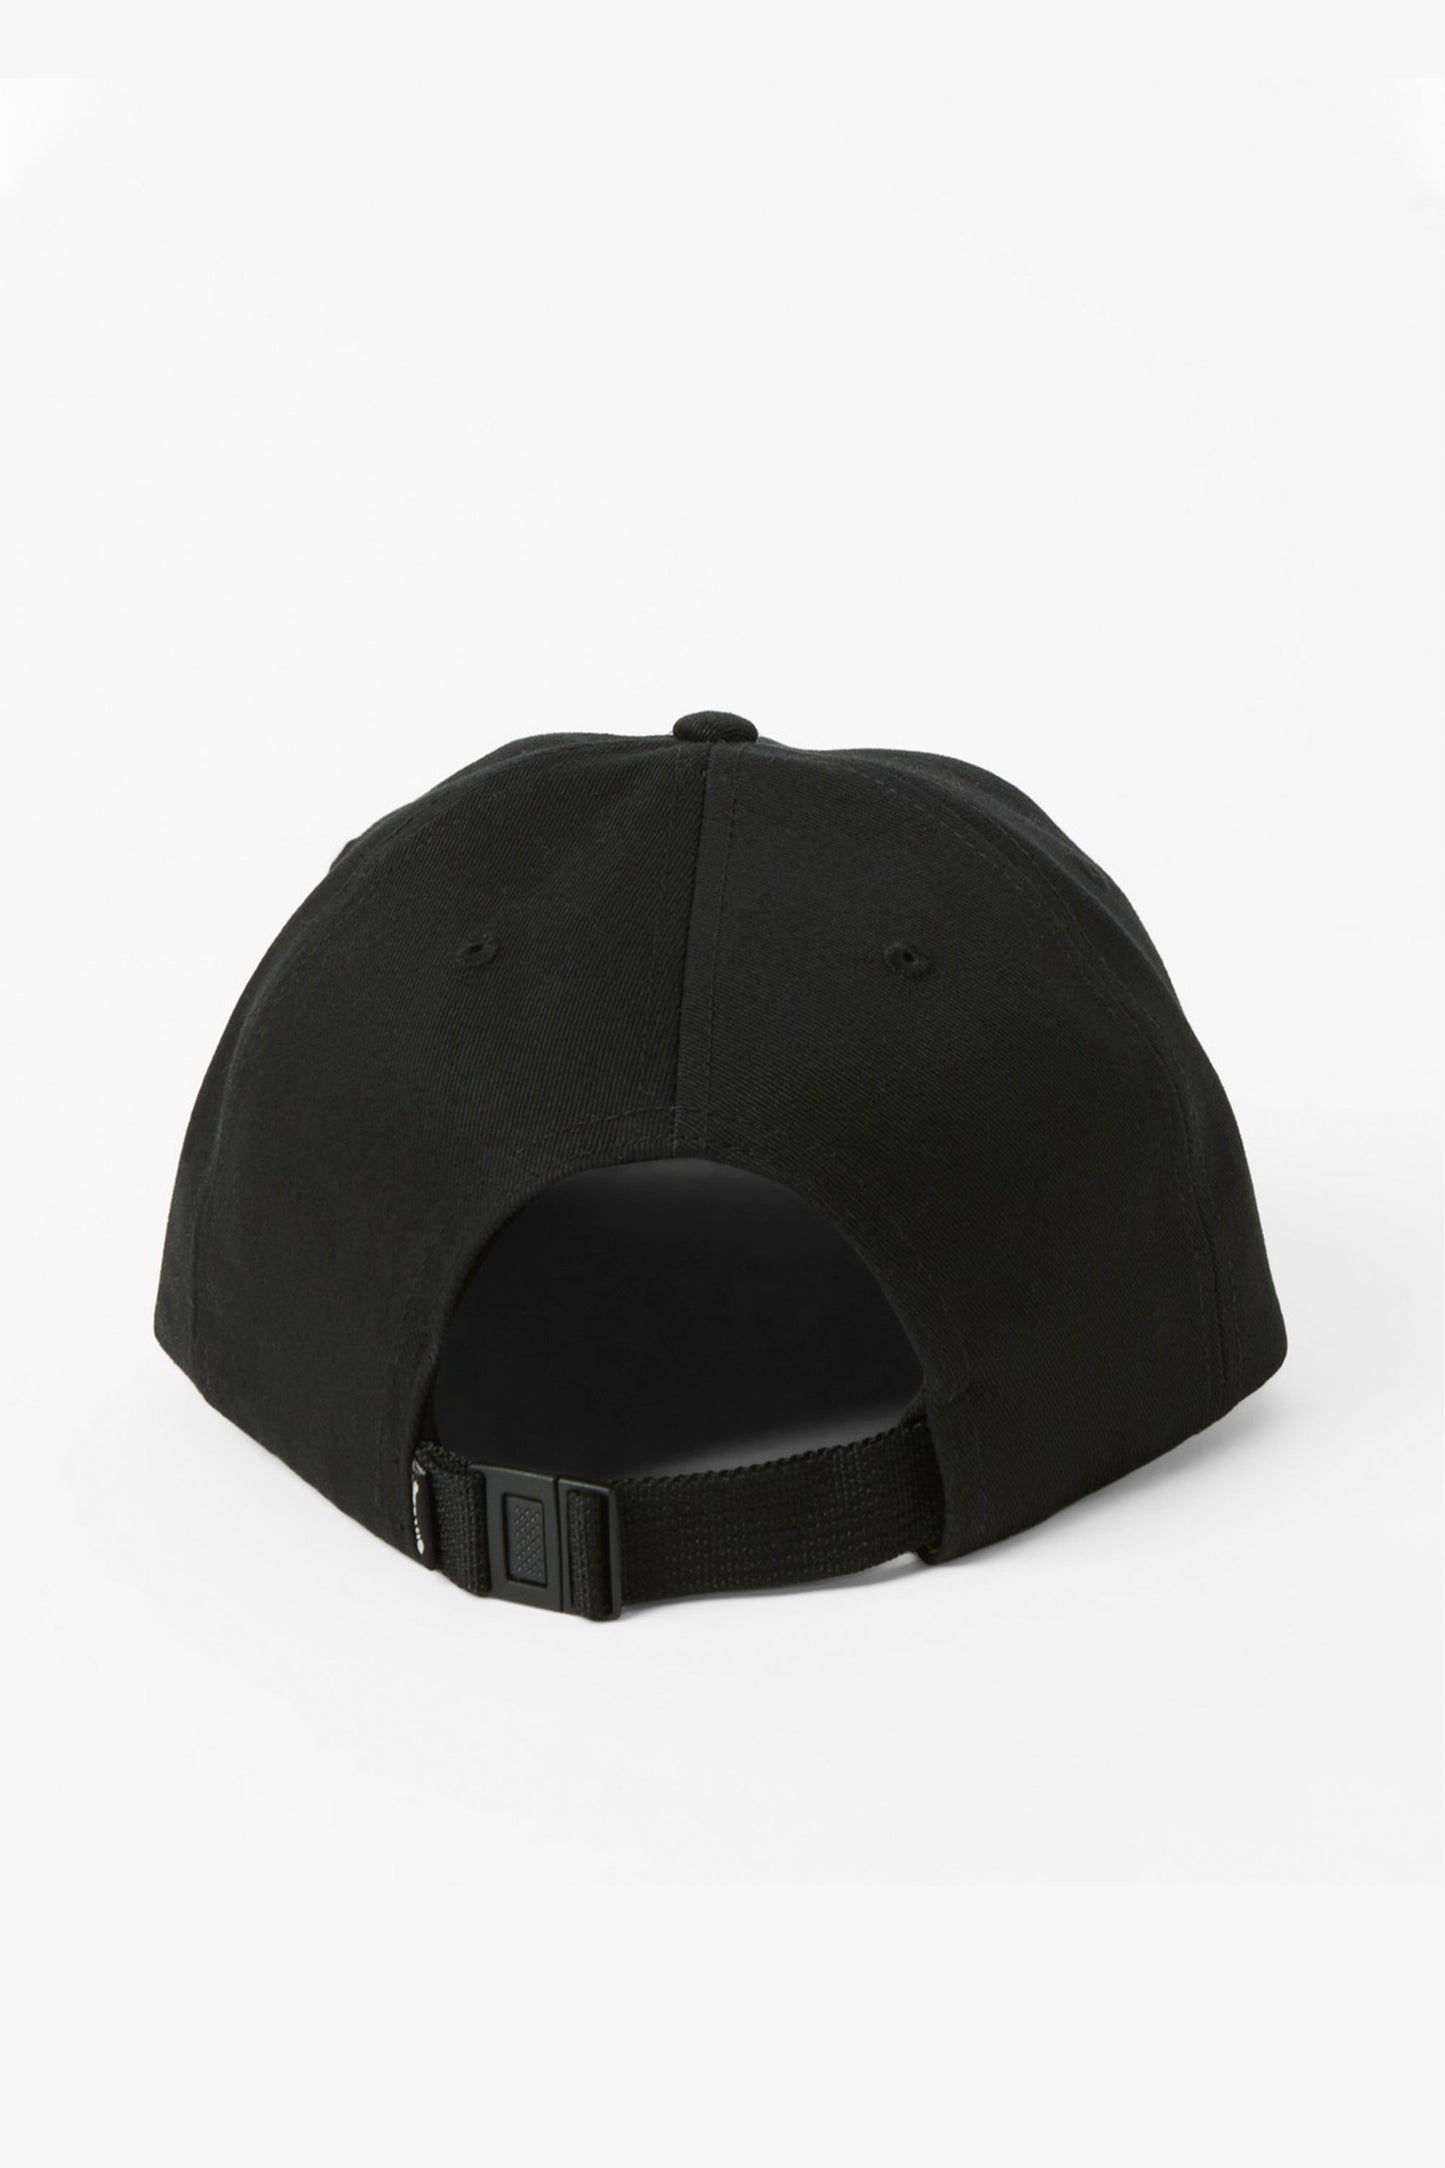 Acc. HATS, CAPS AND BUCKETS | Shop at PUKAS SURF SHOP | Baseball Caps